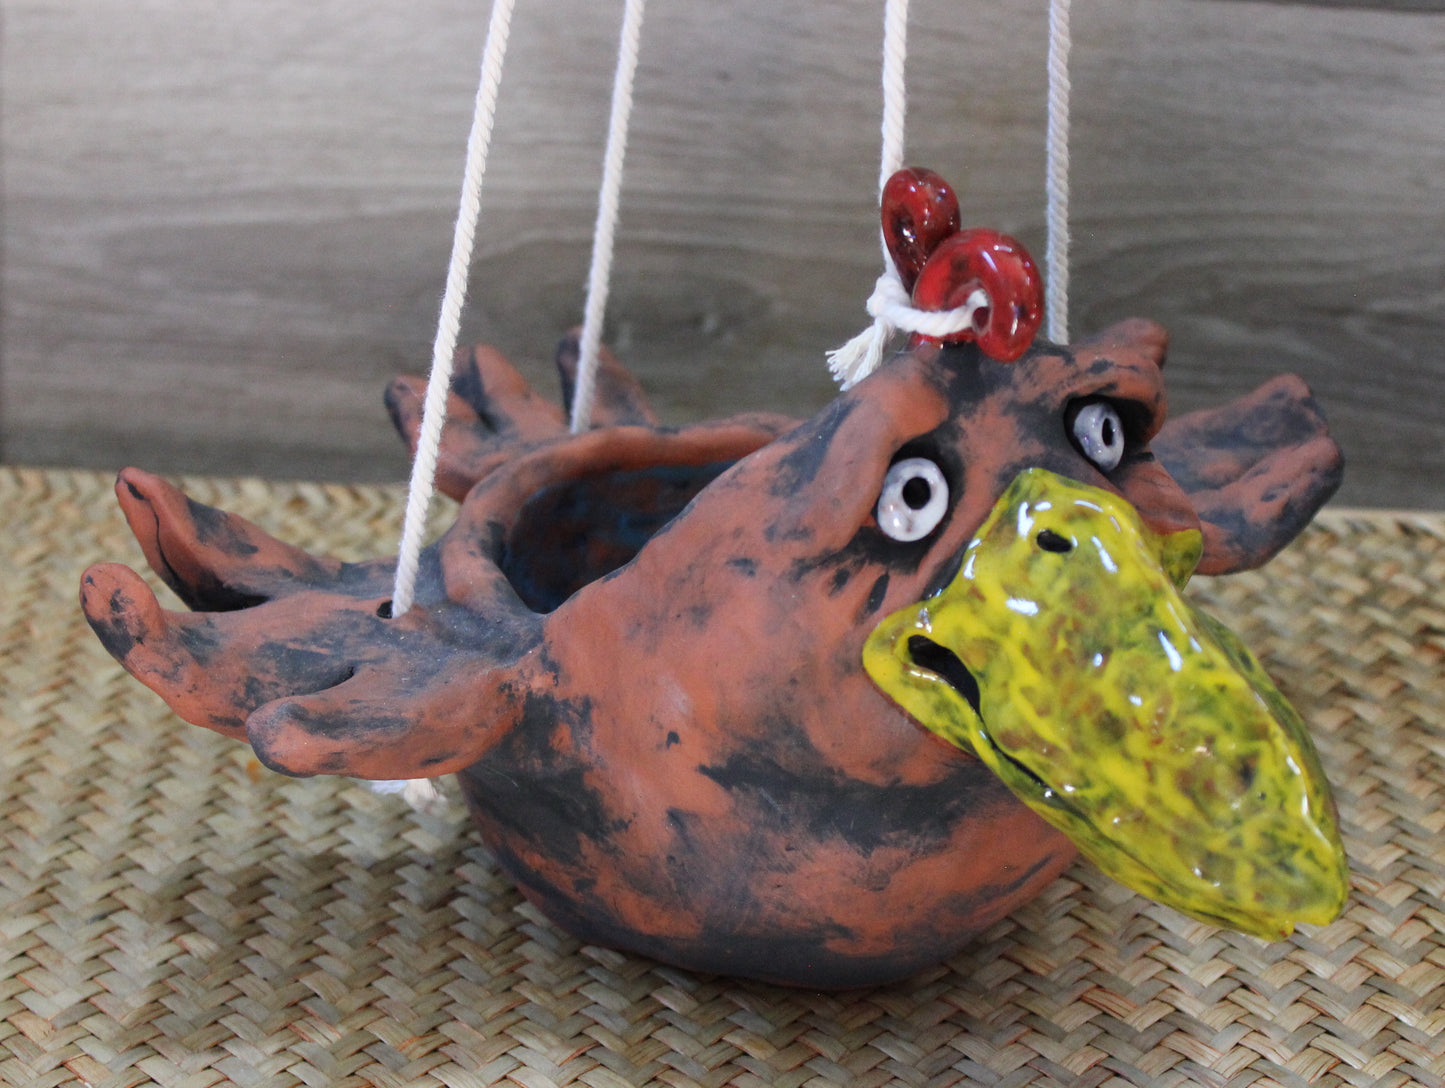 Ceramic Chicken Sculpture Plant Holder with Hanging Macrame